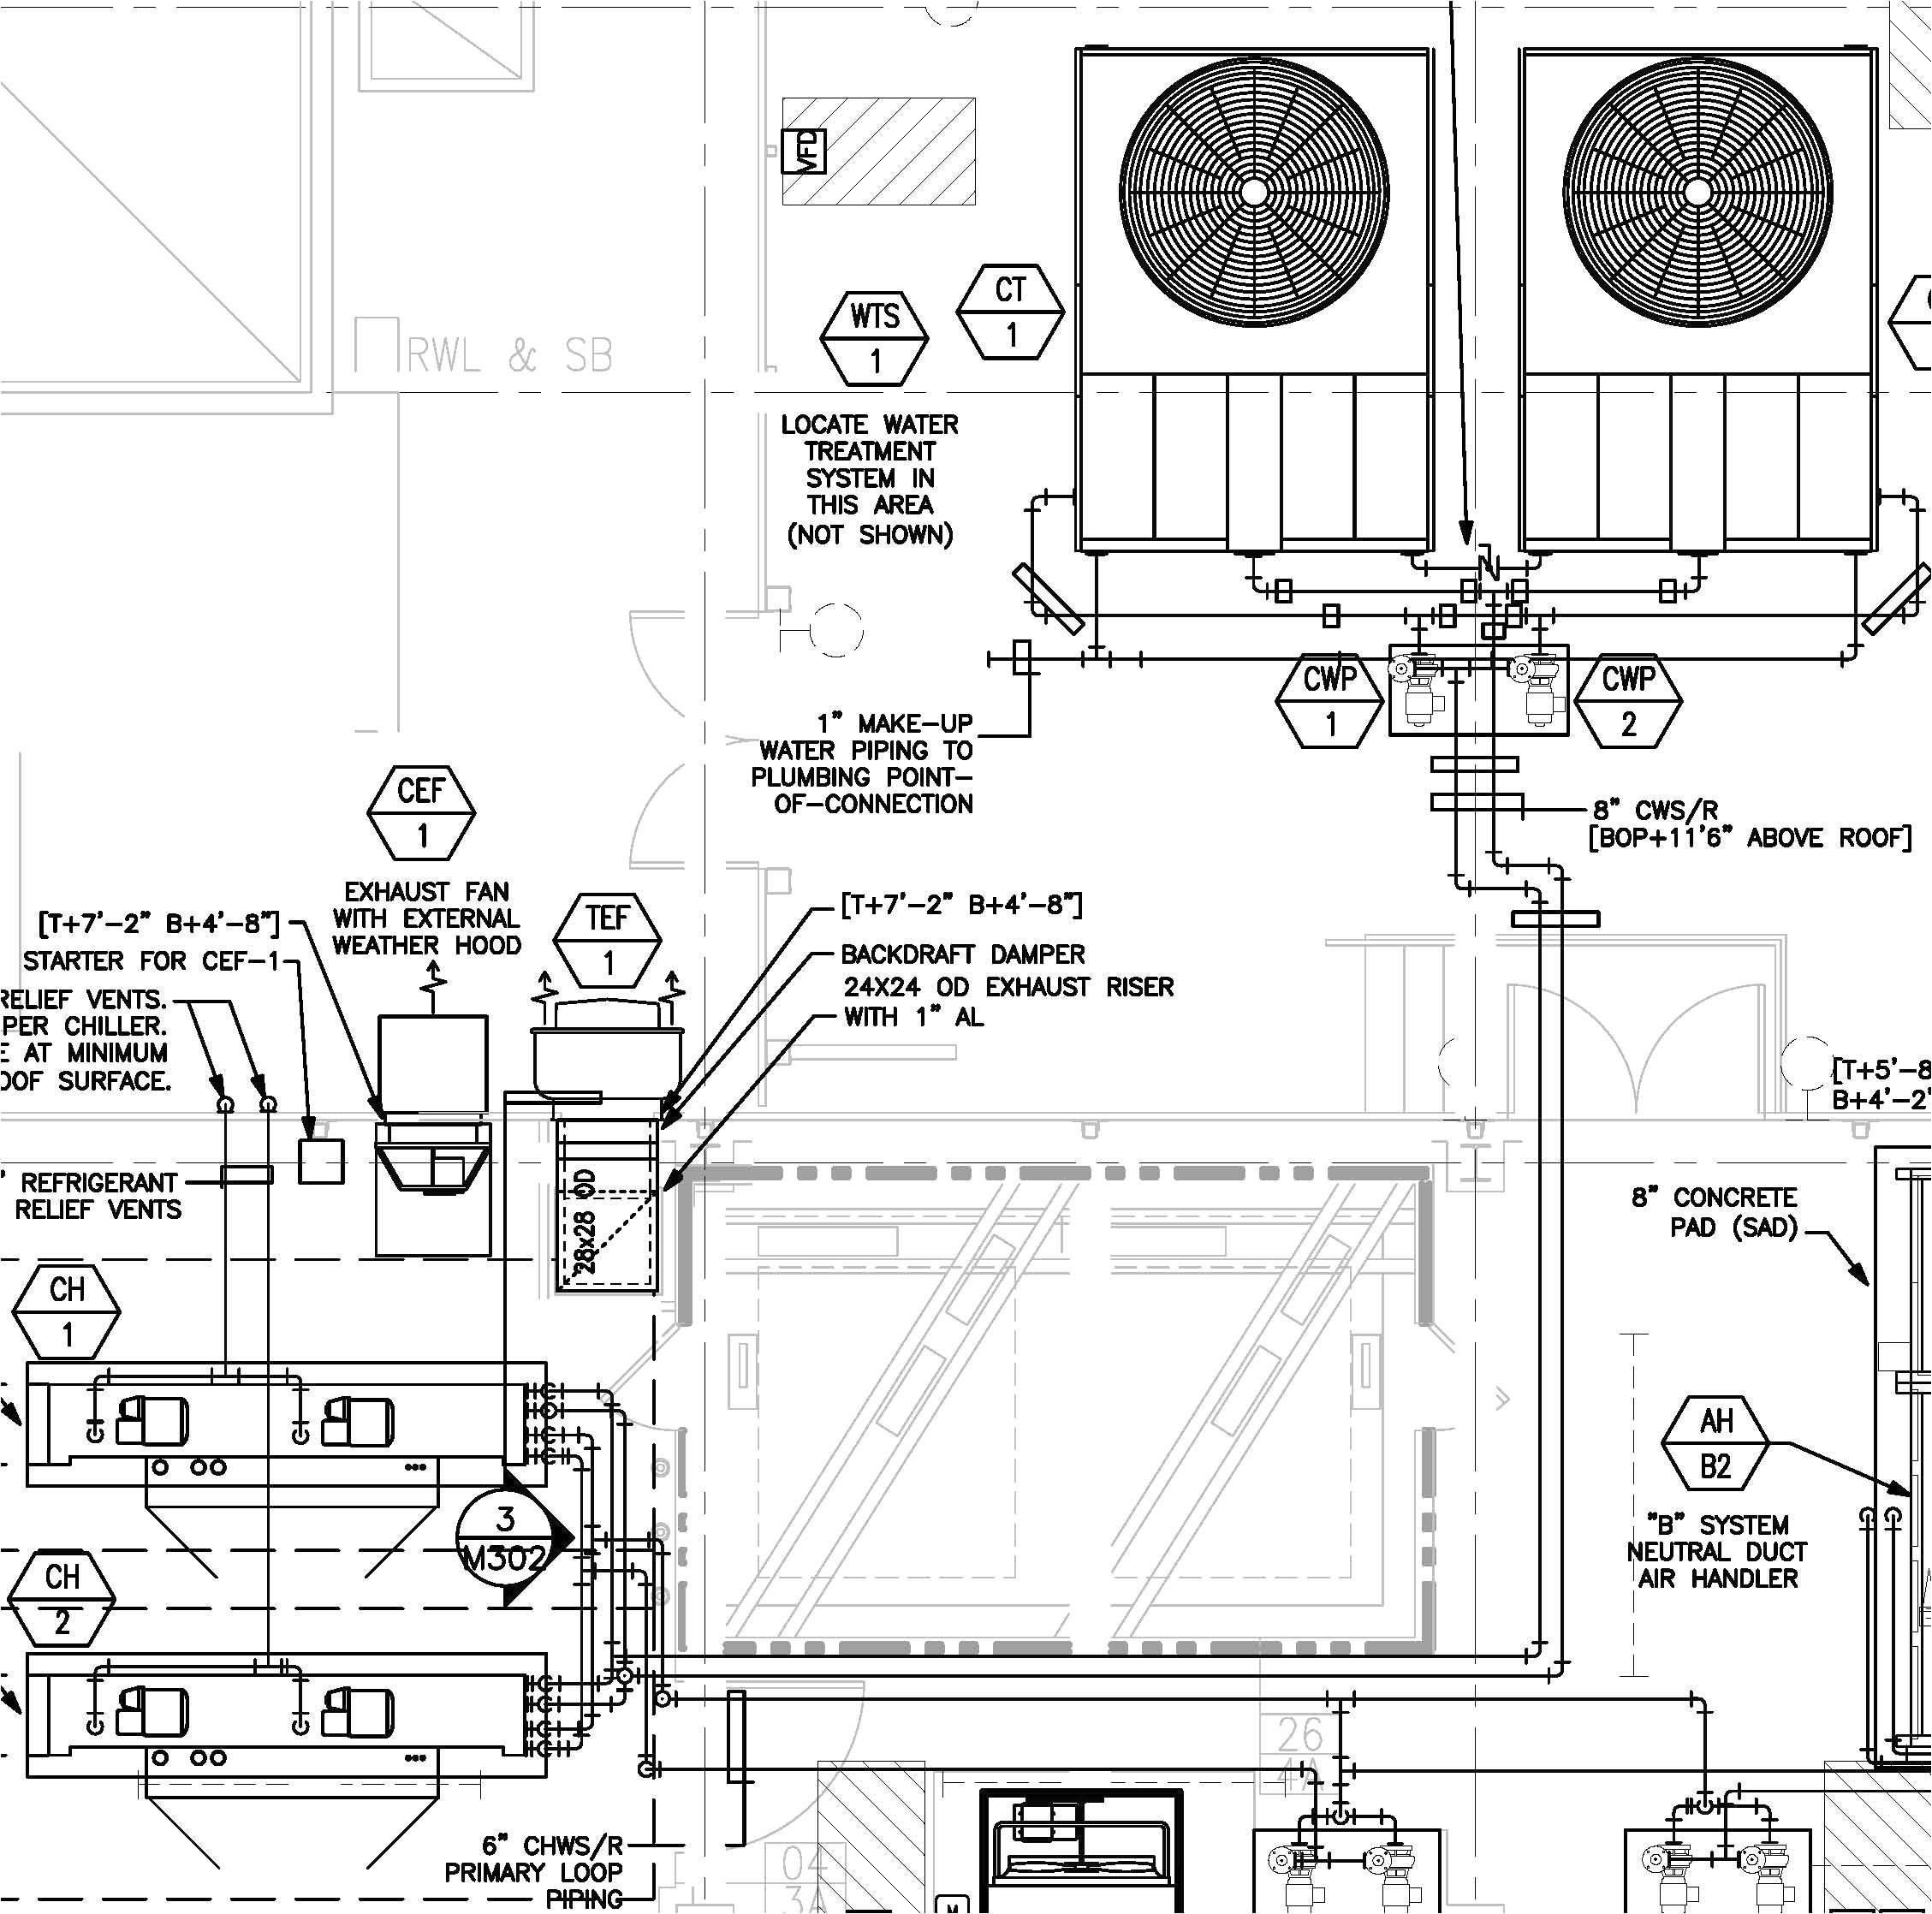 grundfos wiring diagrams wiring diagram database grundfos pump wiring diagram by color grundfos pump wiring